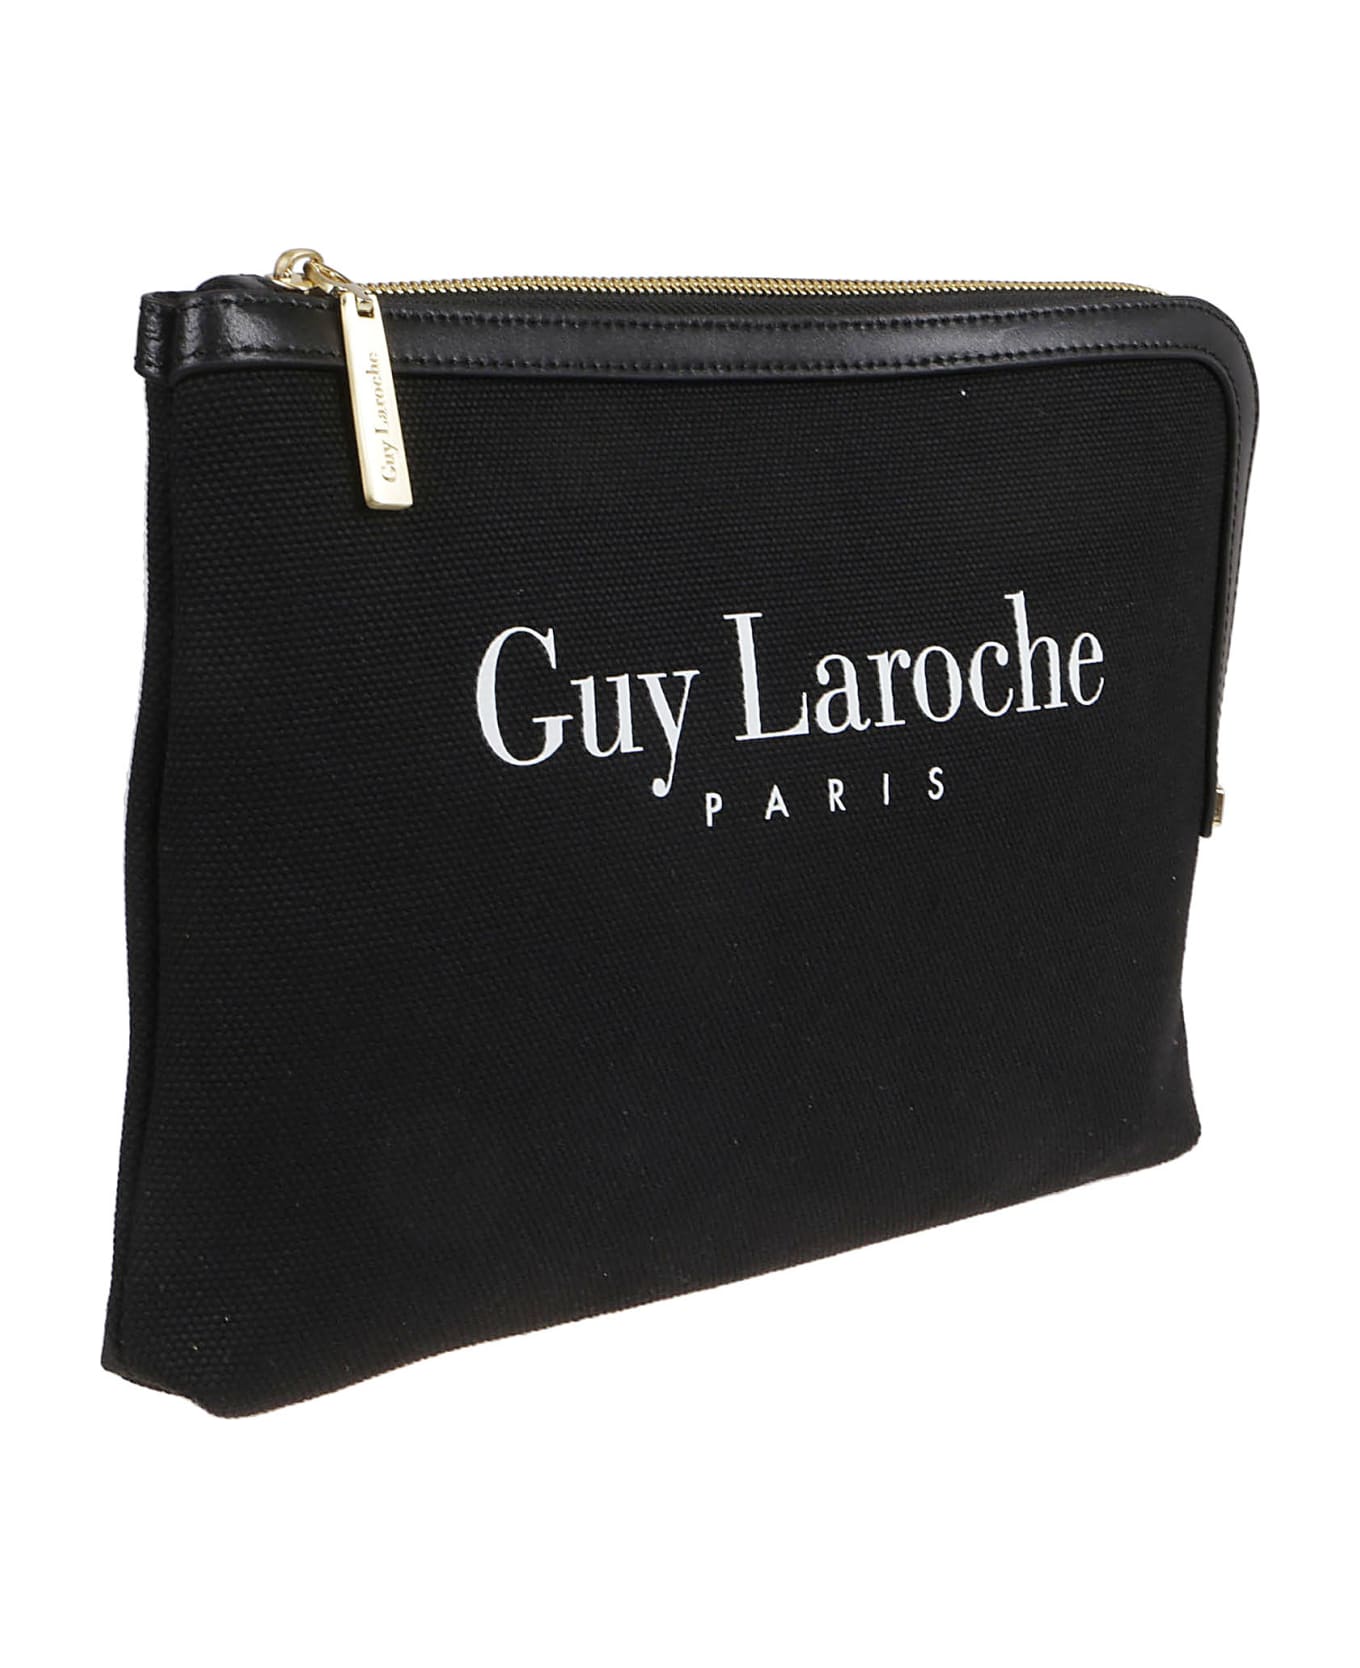 Guy Laroche Crossbody Bag - Nero クラッチバッグ